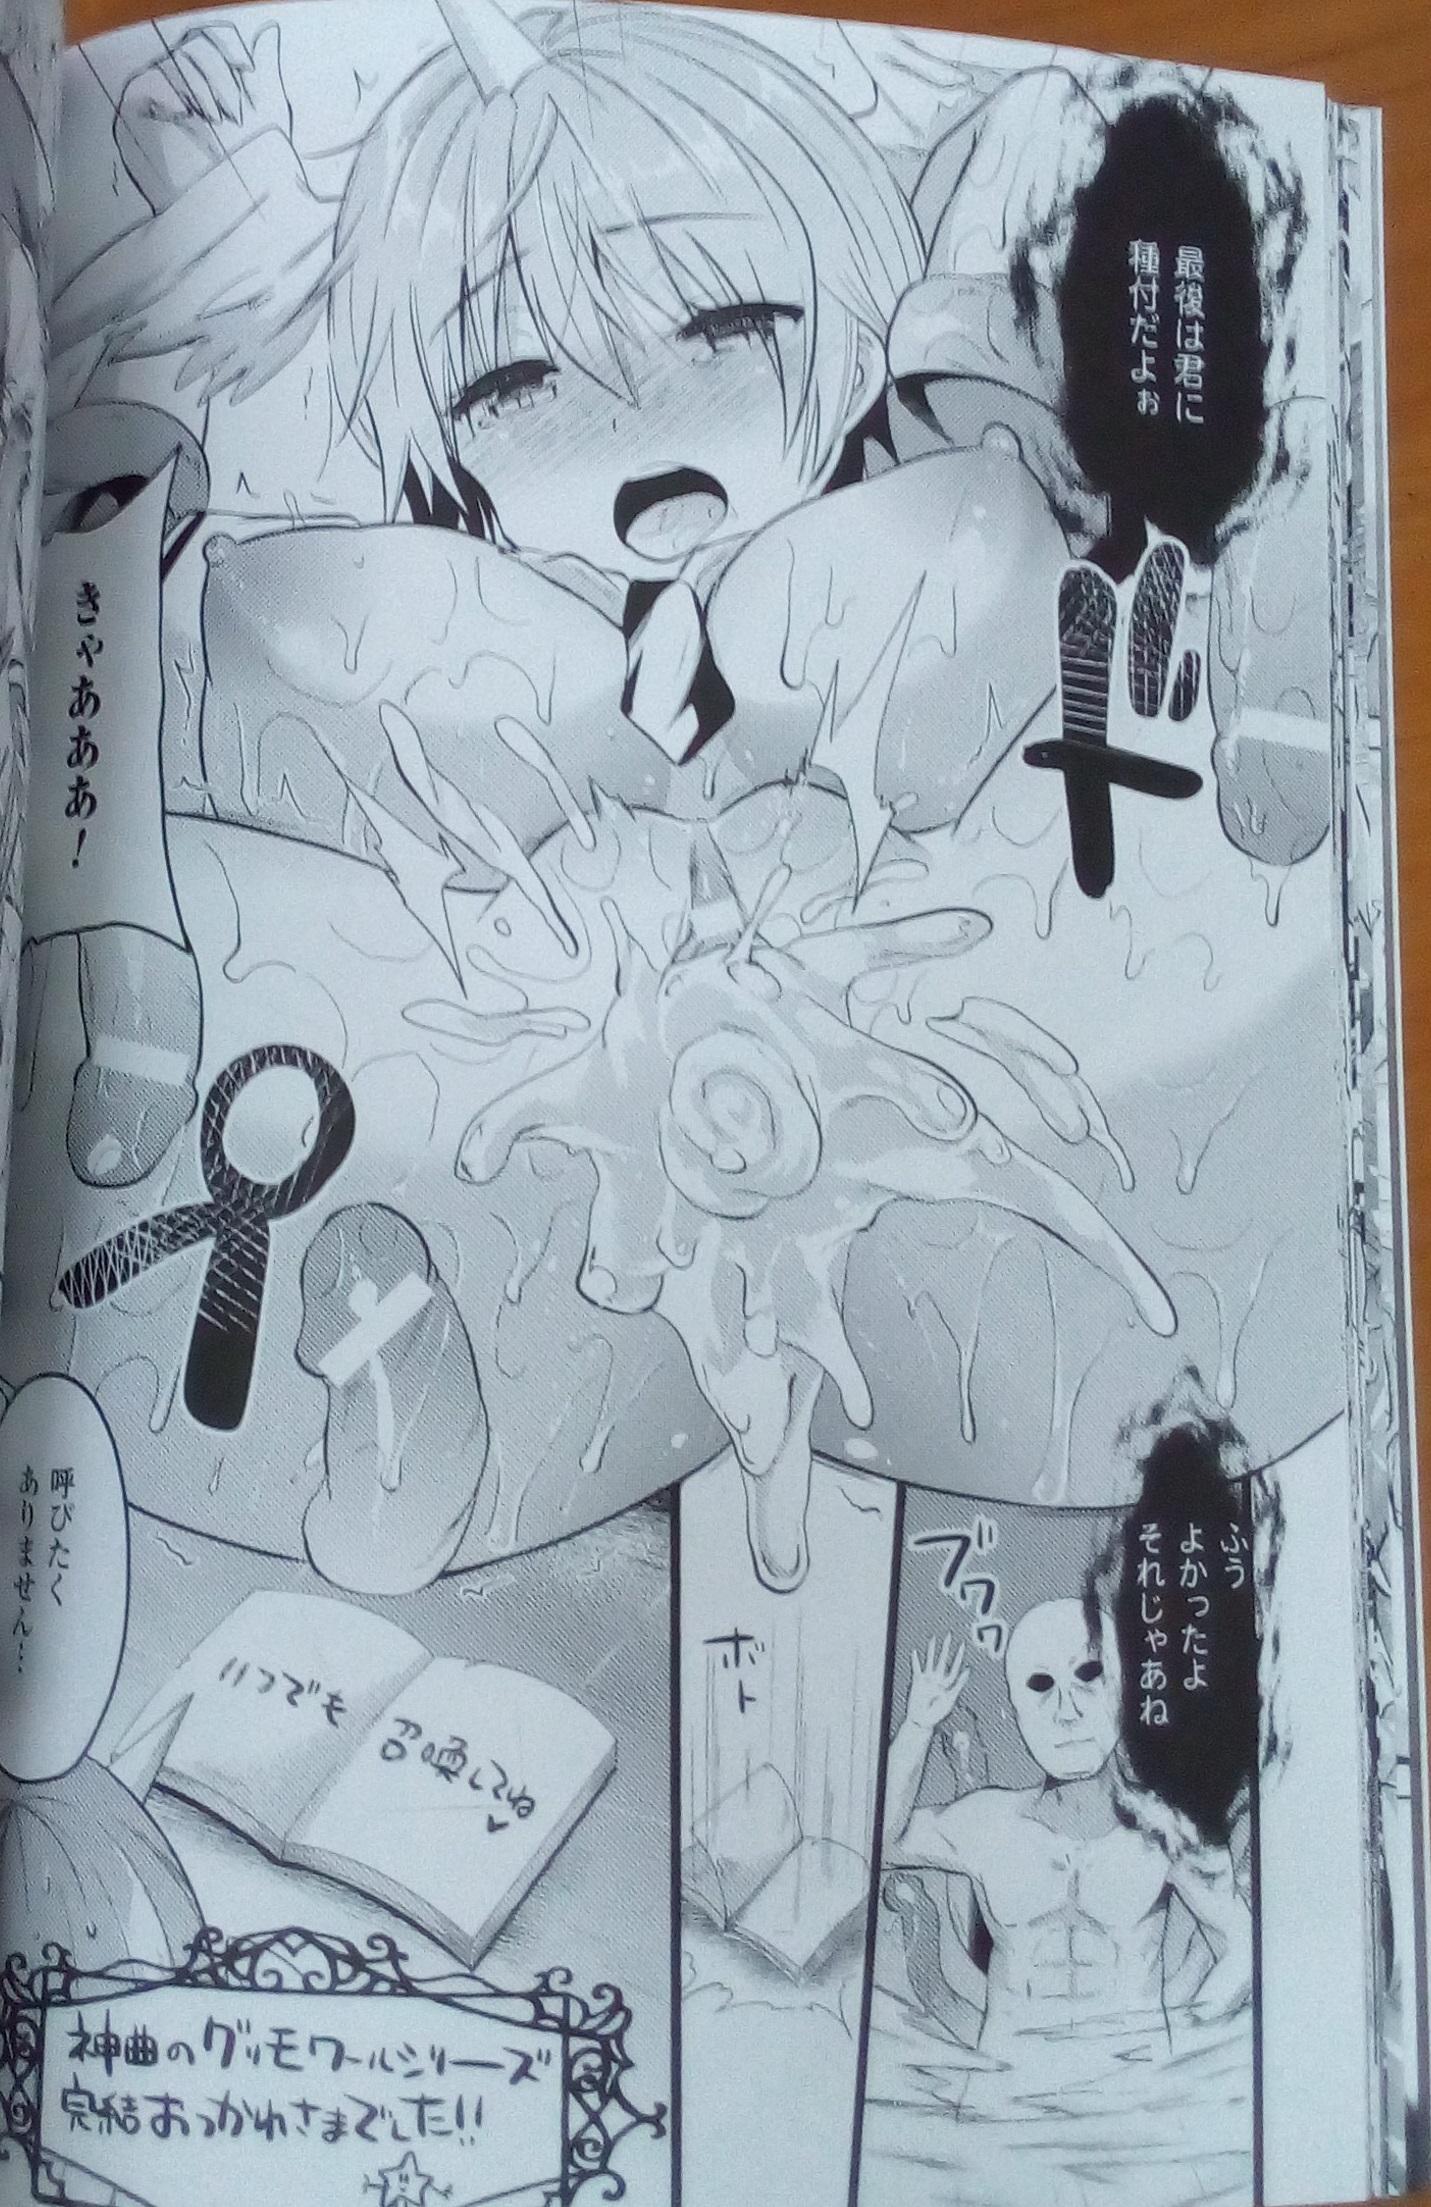 [Erect Sawaru] Shinkyoku no Grimoire III -PANDRA saga 2nd story-  Append book [Photoed] 30